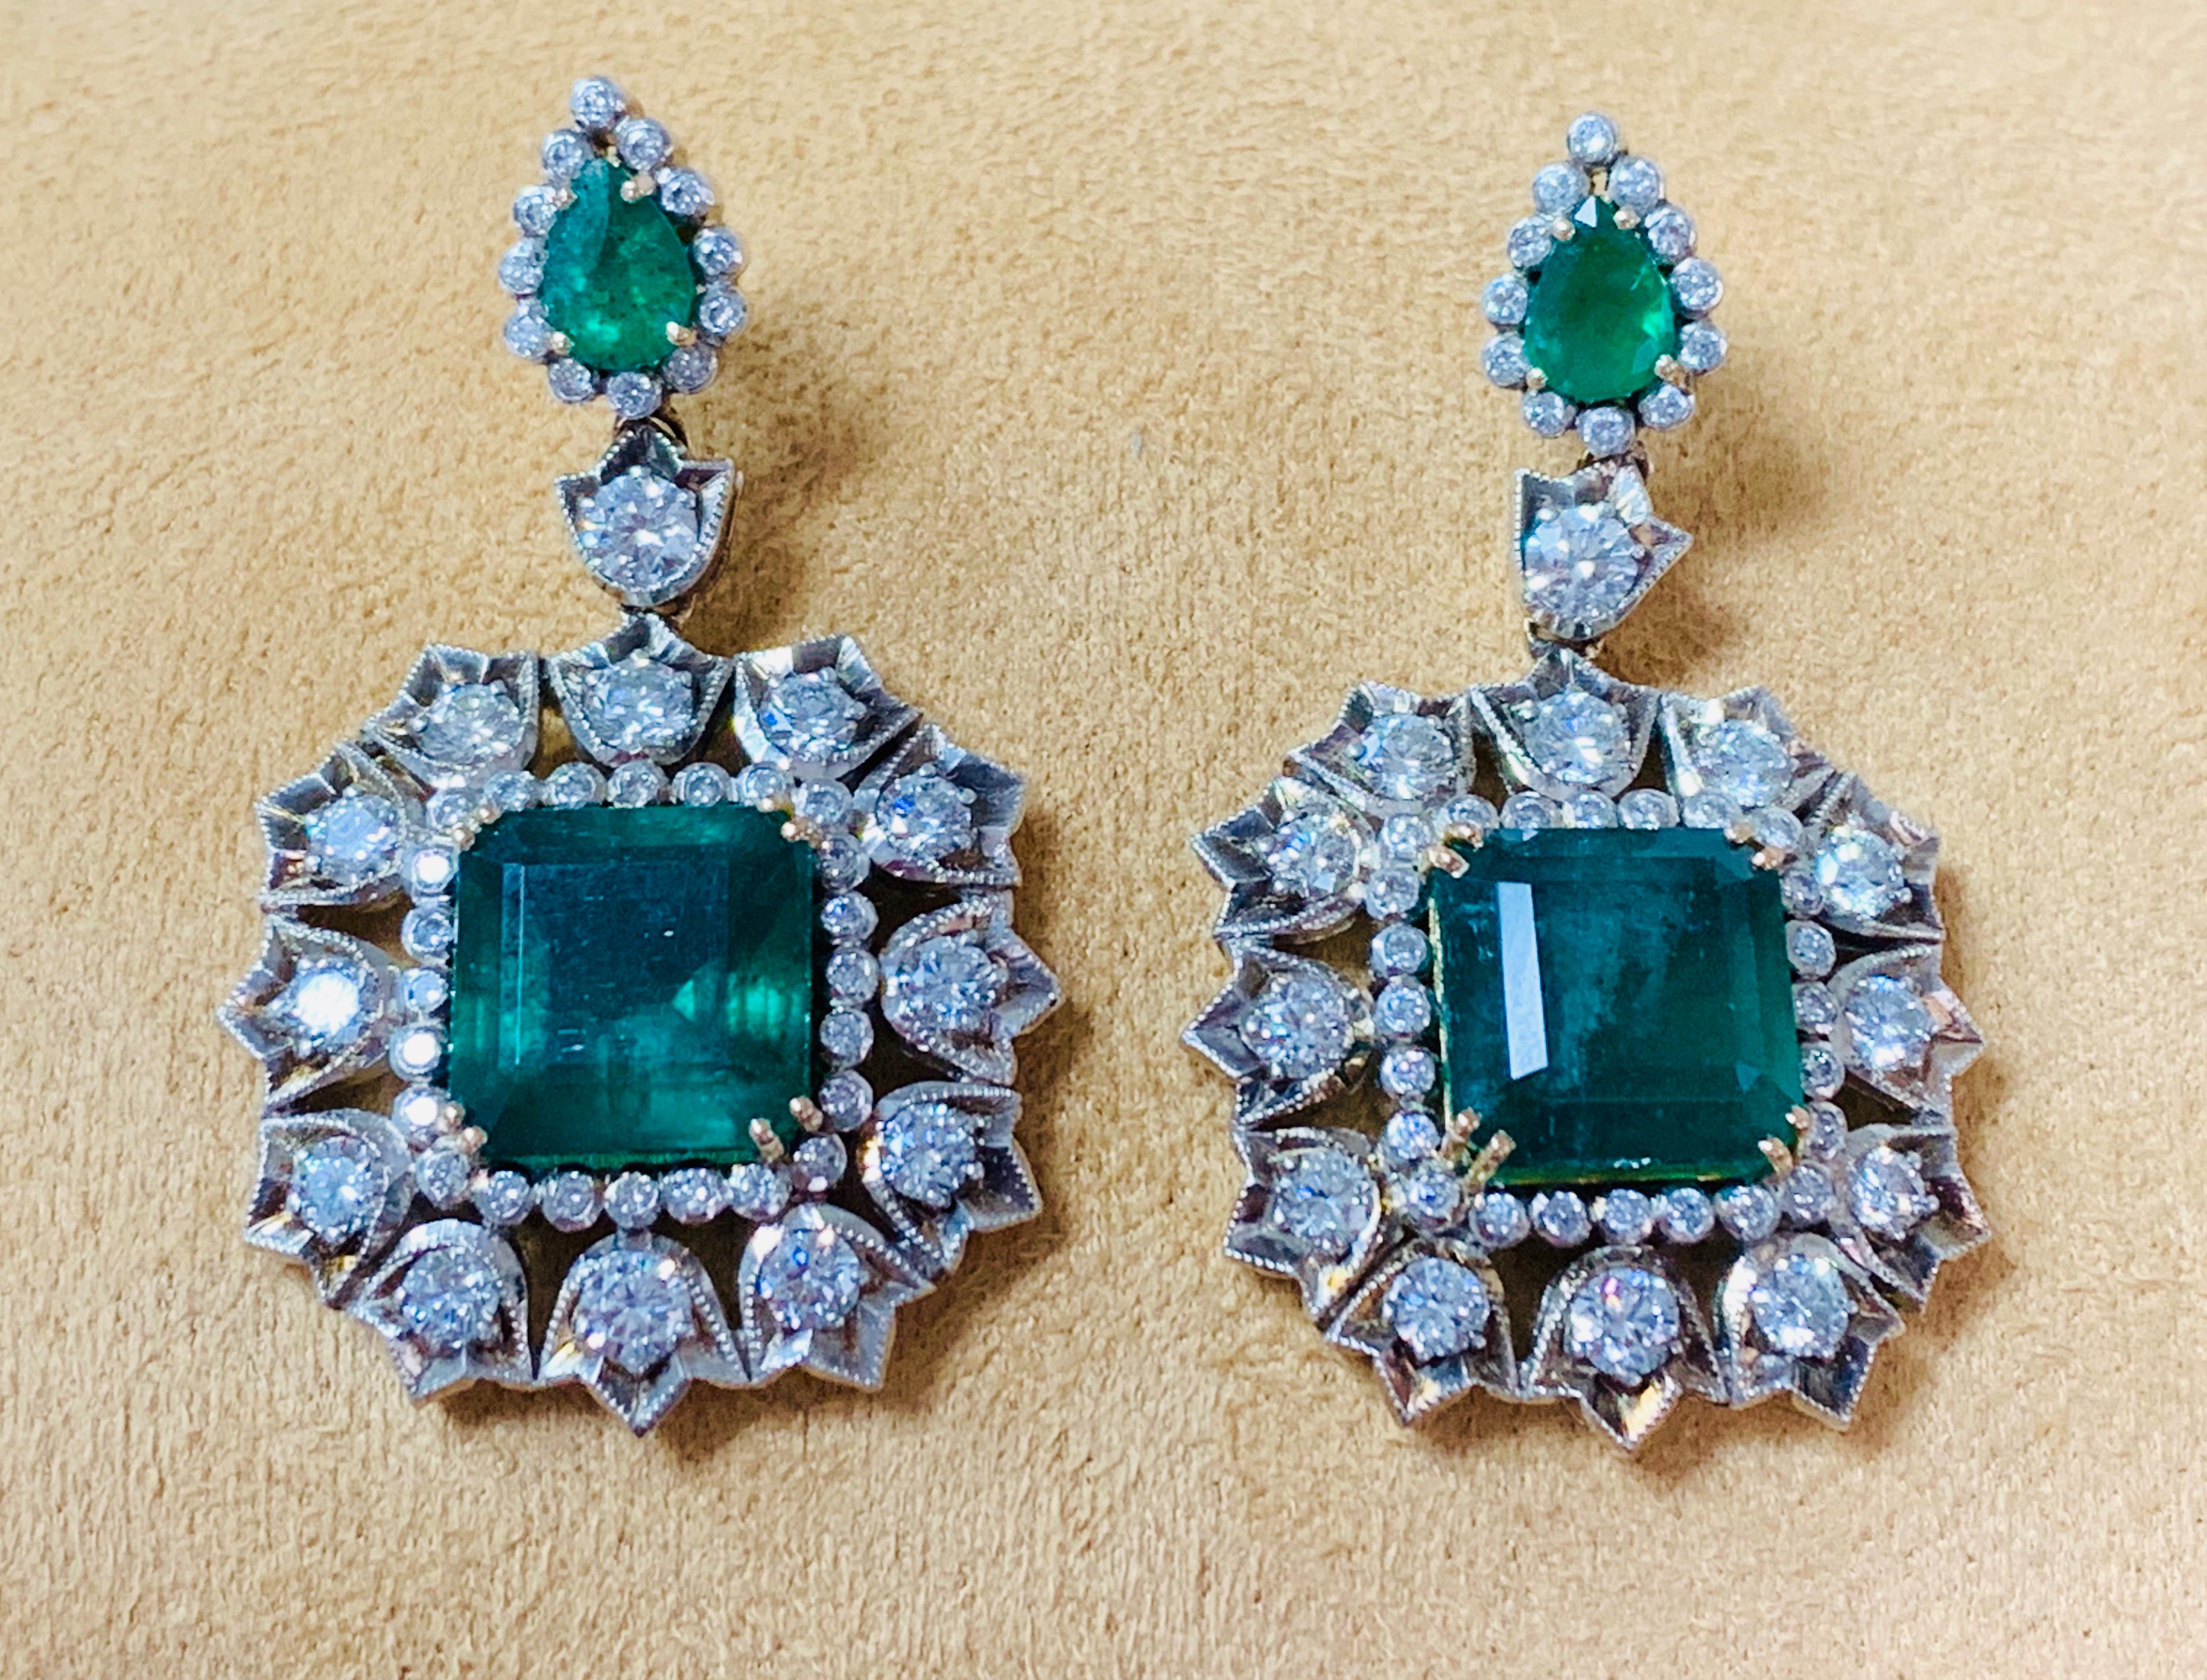 Moguldiam Inc Emerald and diamond earrings handmade in 18k gold. 

Emerald weight : 18.40 carat  
Diamond weight : 5.40 carat 
Metal : 18K Gold 
